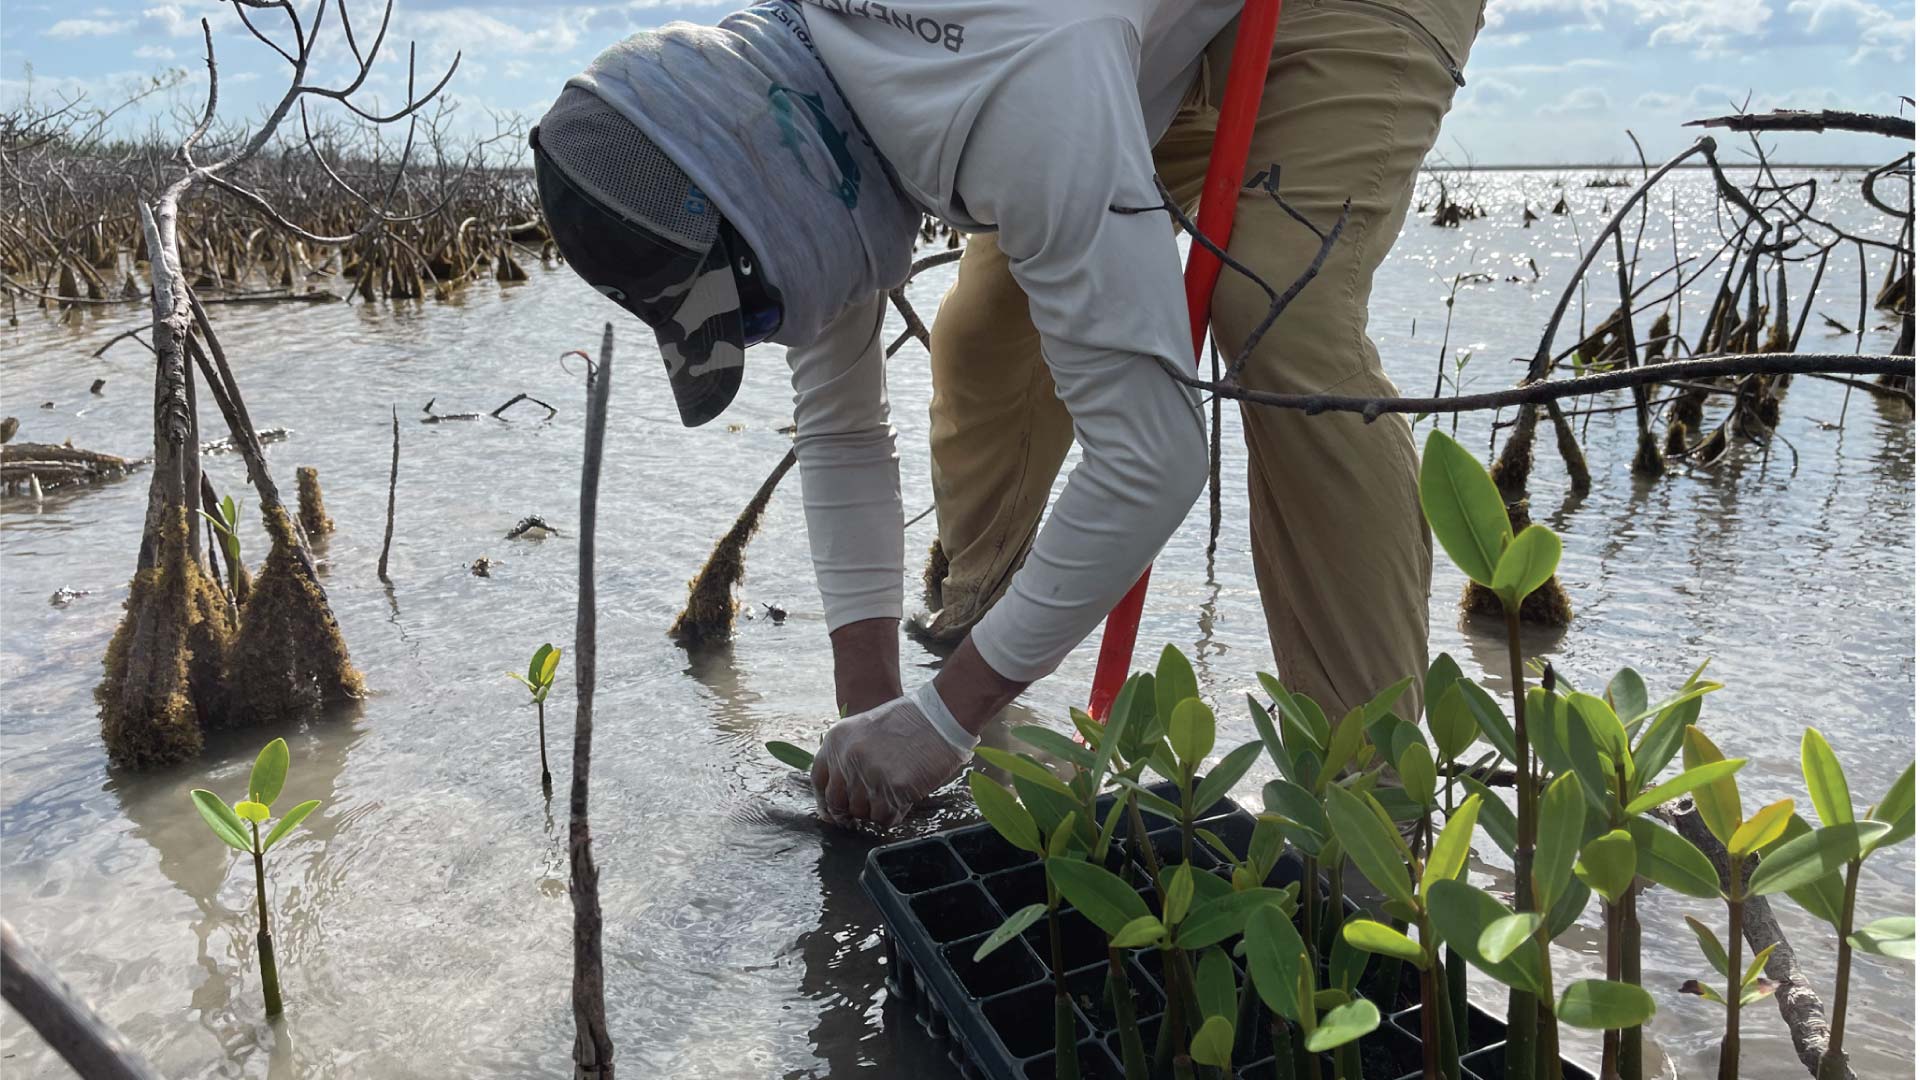 MANG Volunteer planting mangrove seedlings into shallow watered soil